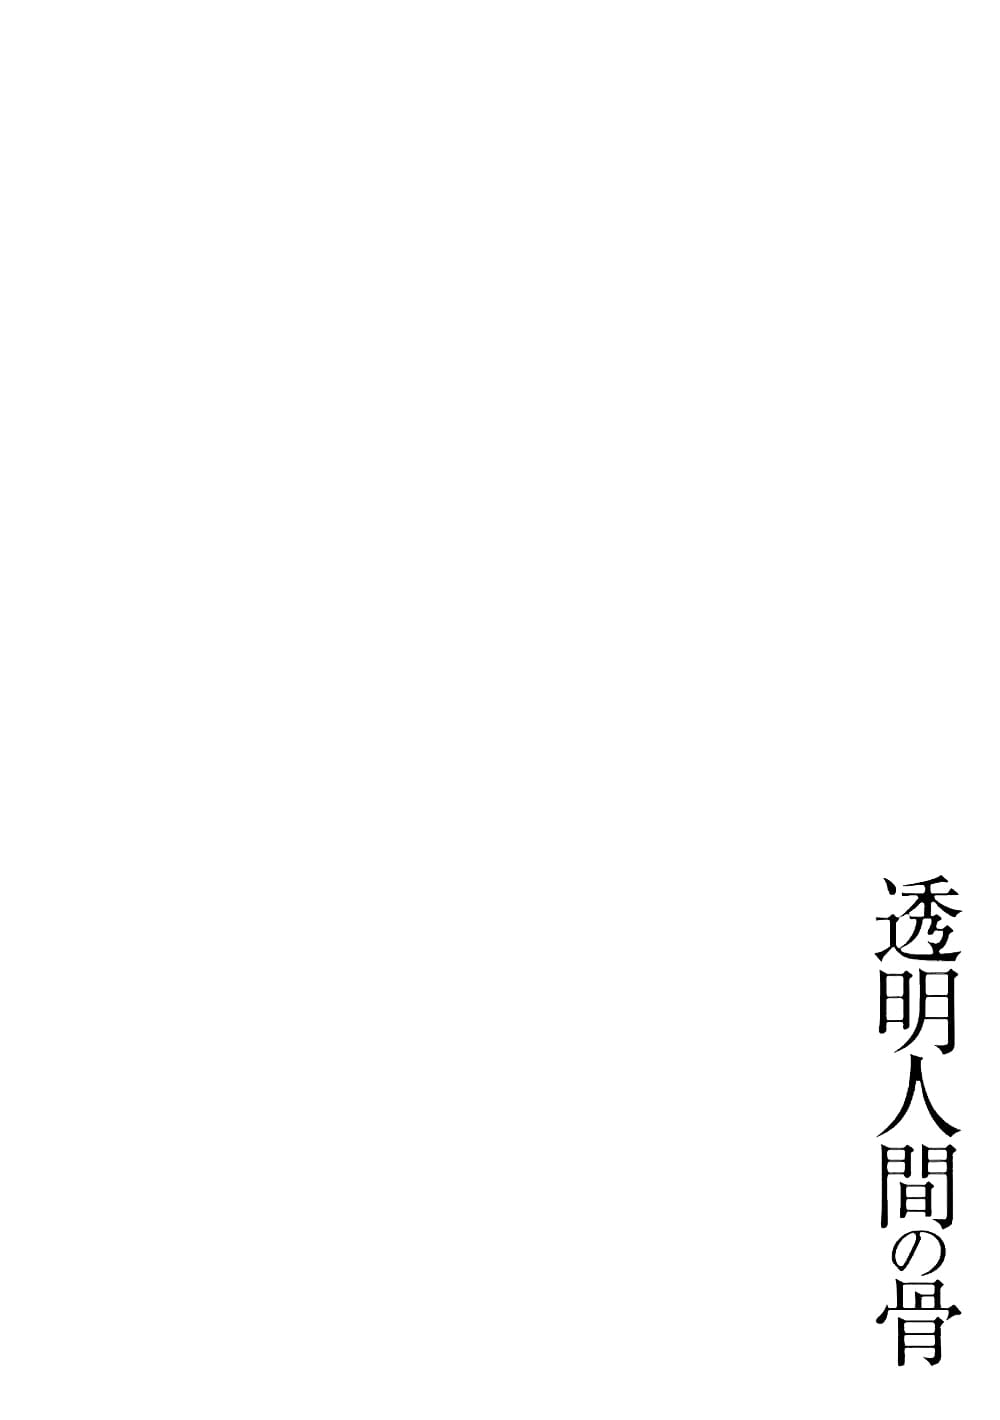 Toumei Ningen no Hone 22-ทะเล และความมืดมิด องค์ที่ 2 (สีดำสนิท) [END]